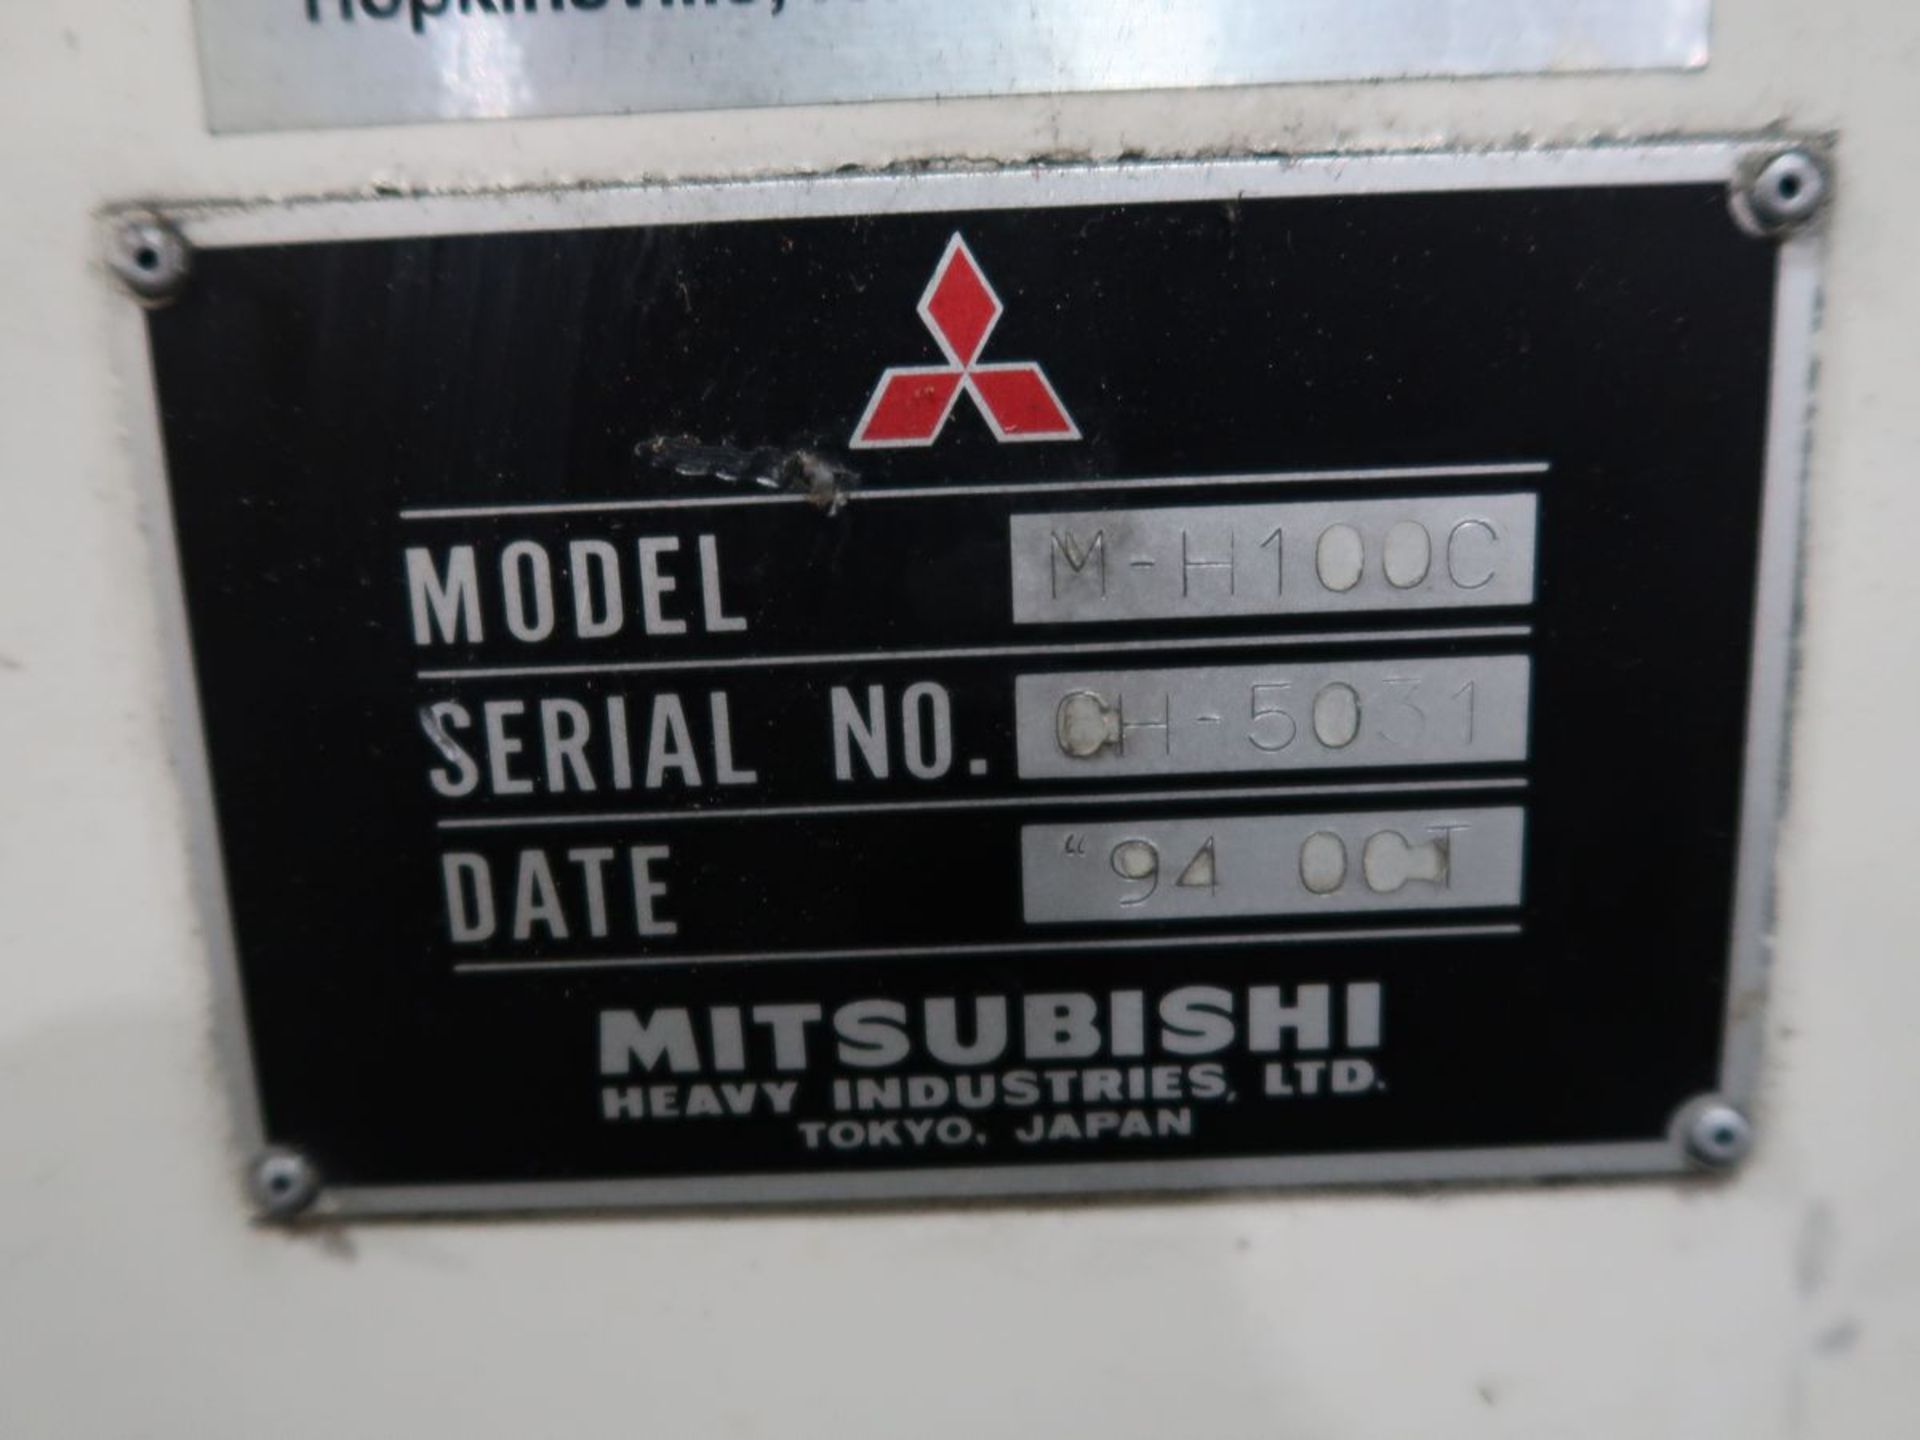 1994 Mitsubishi M-H100C CNC Horizontal Machining Center - Image 17 of 17